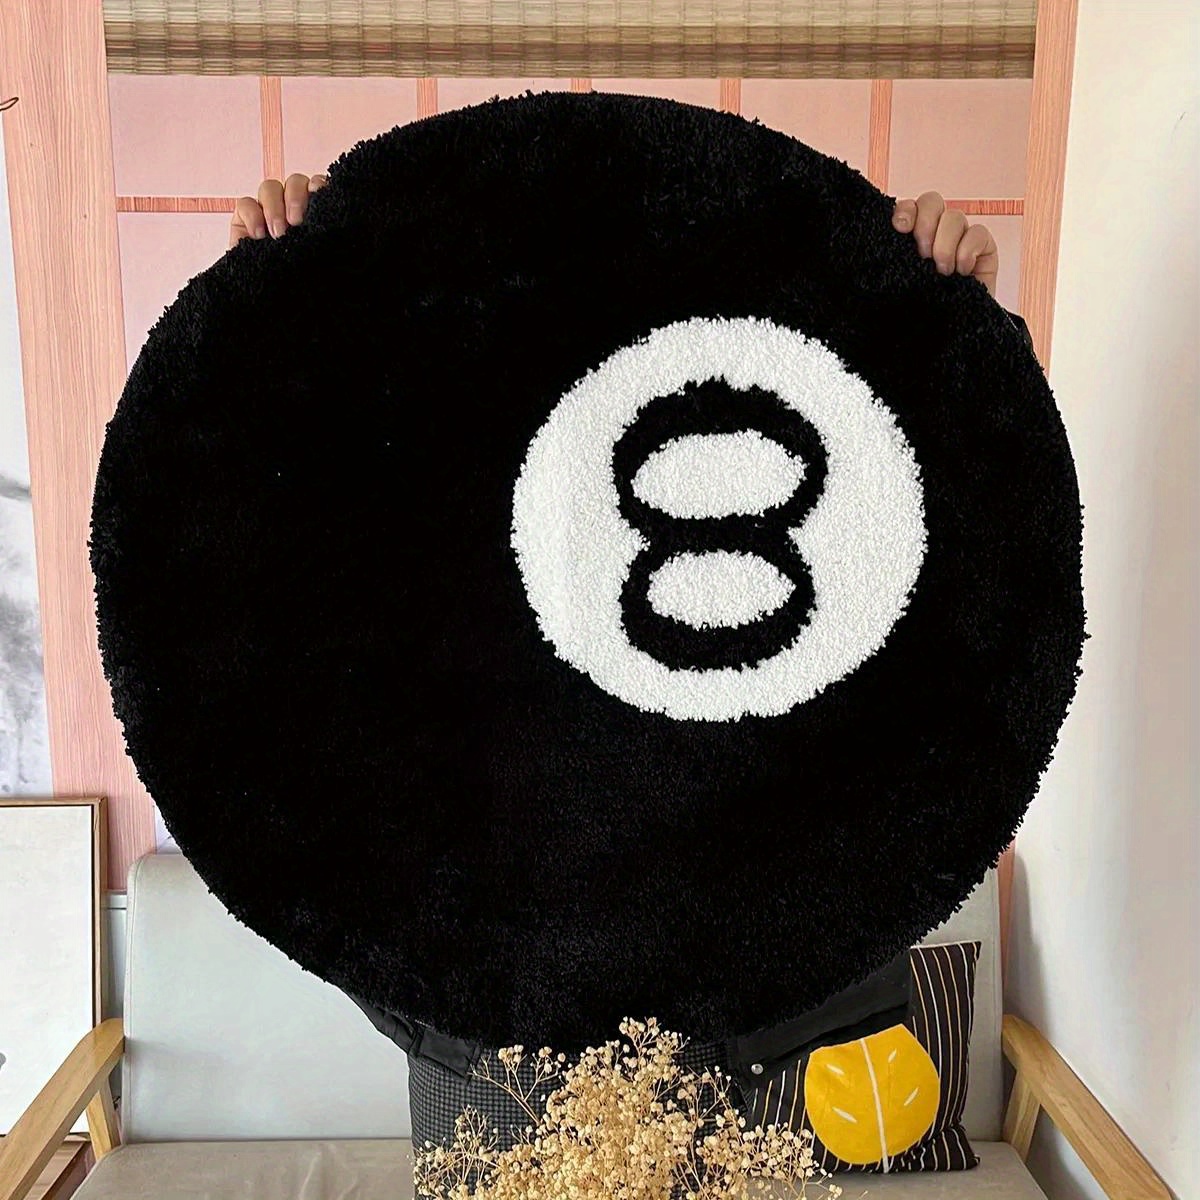 

1pc, Black 8 Balls Area Rug, Tufted Flocking Carpet, Outdoor Carpet, Non-slip Soft And Comfortable Fluffy Black Rug Bedroom Decor, Black Circle Rugs For Living Room